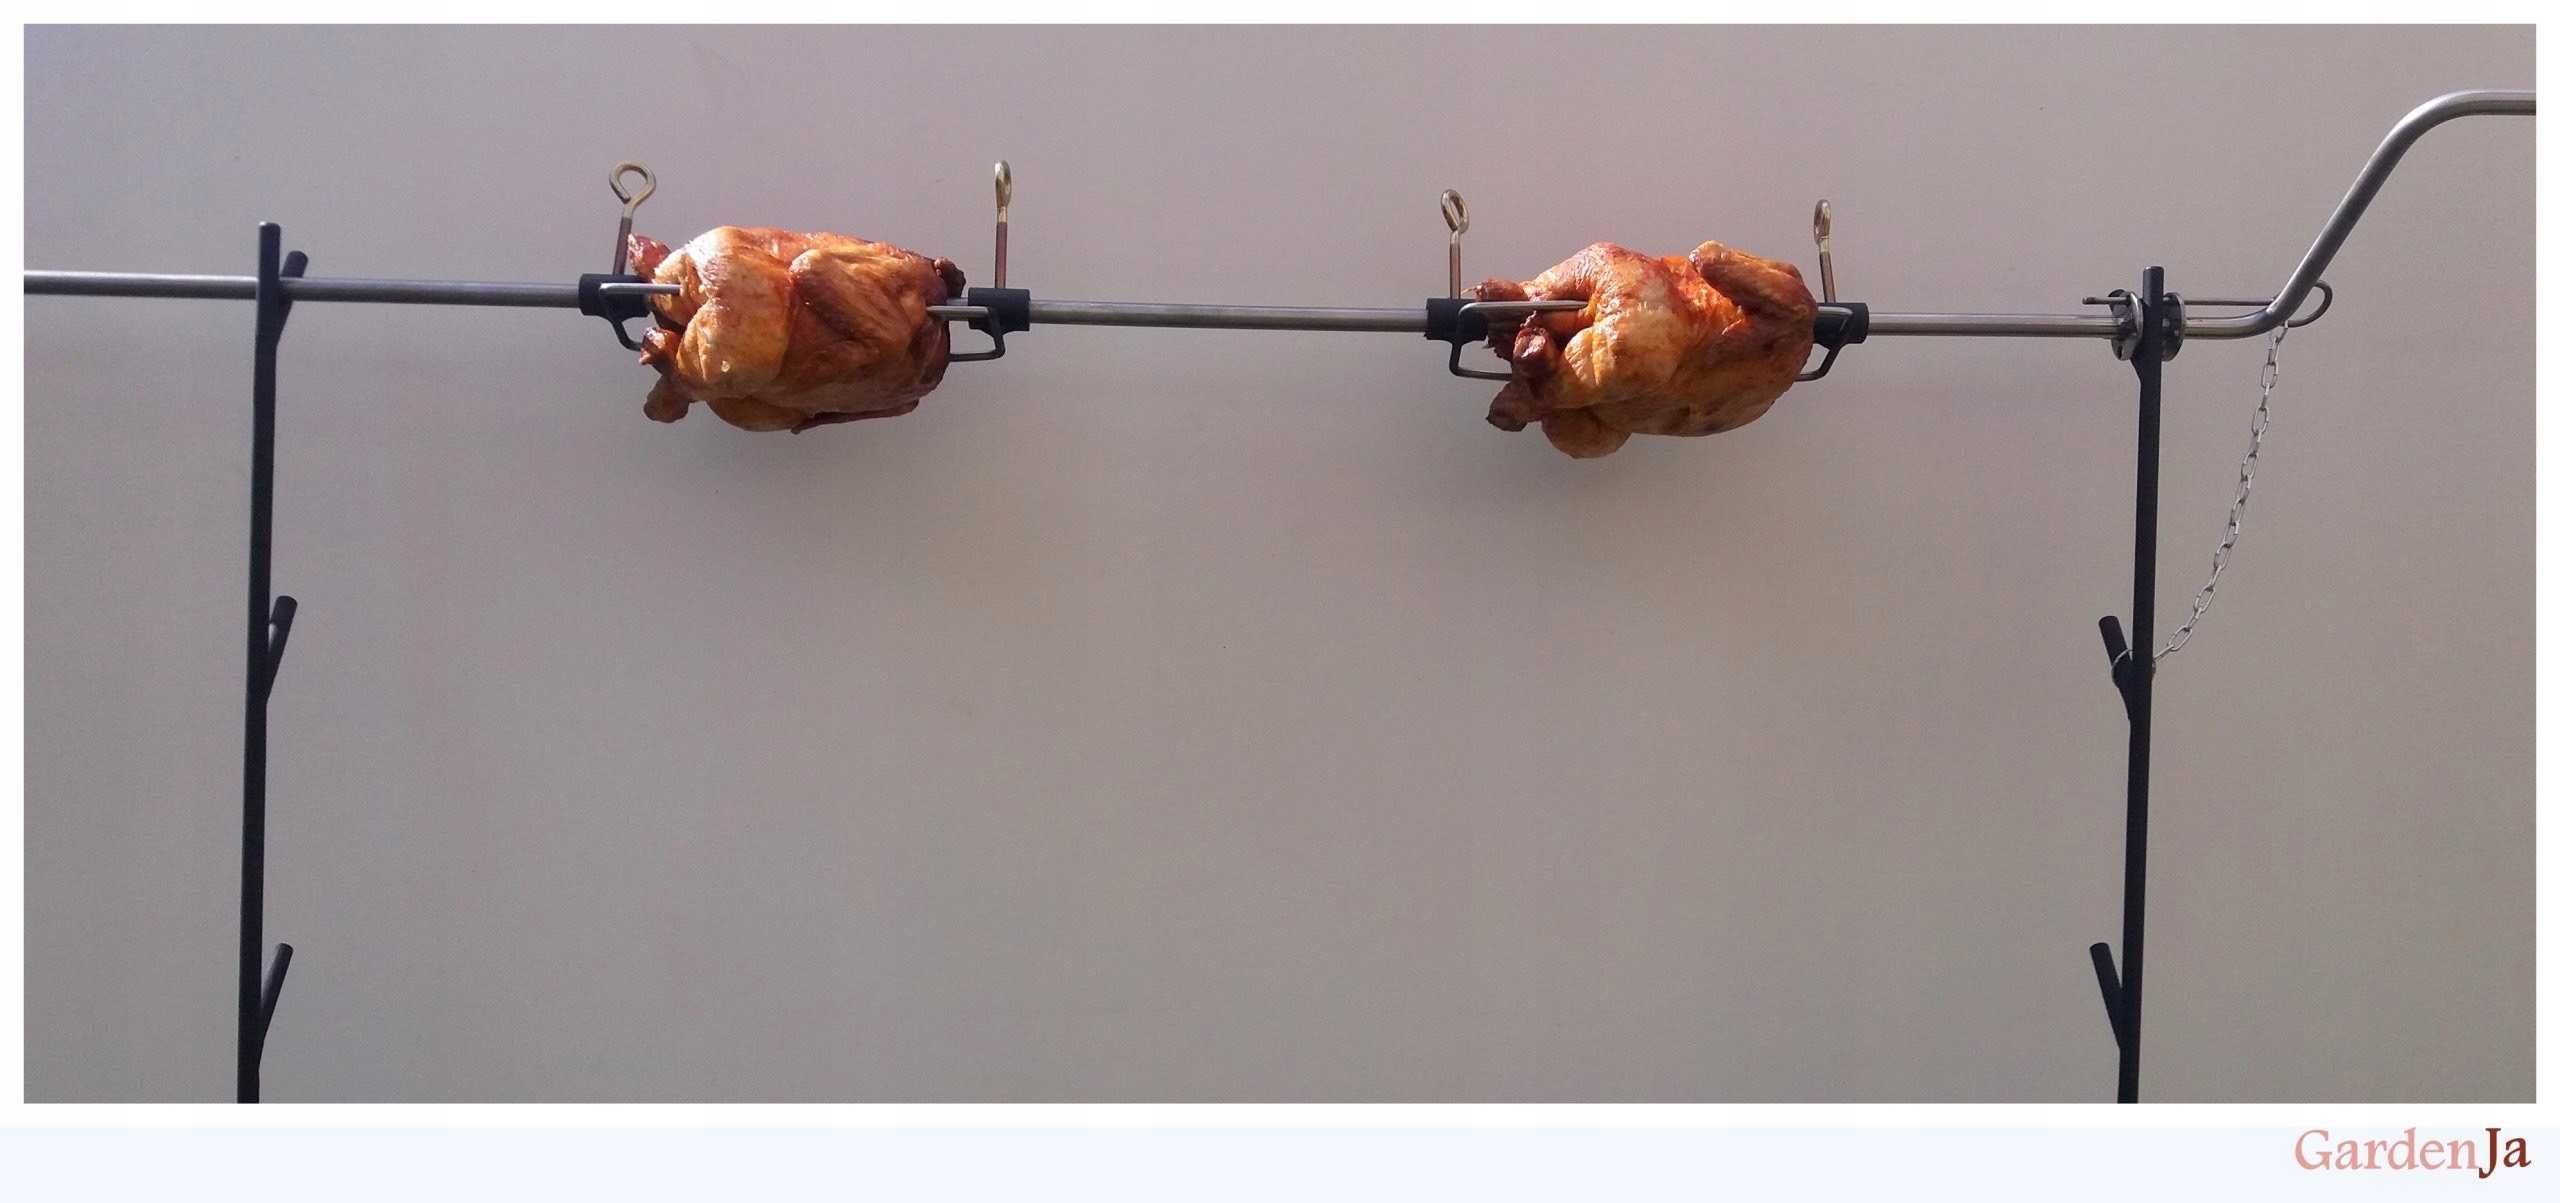 rożen ruszt na kurczaki kiełbaski rożno grill